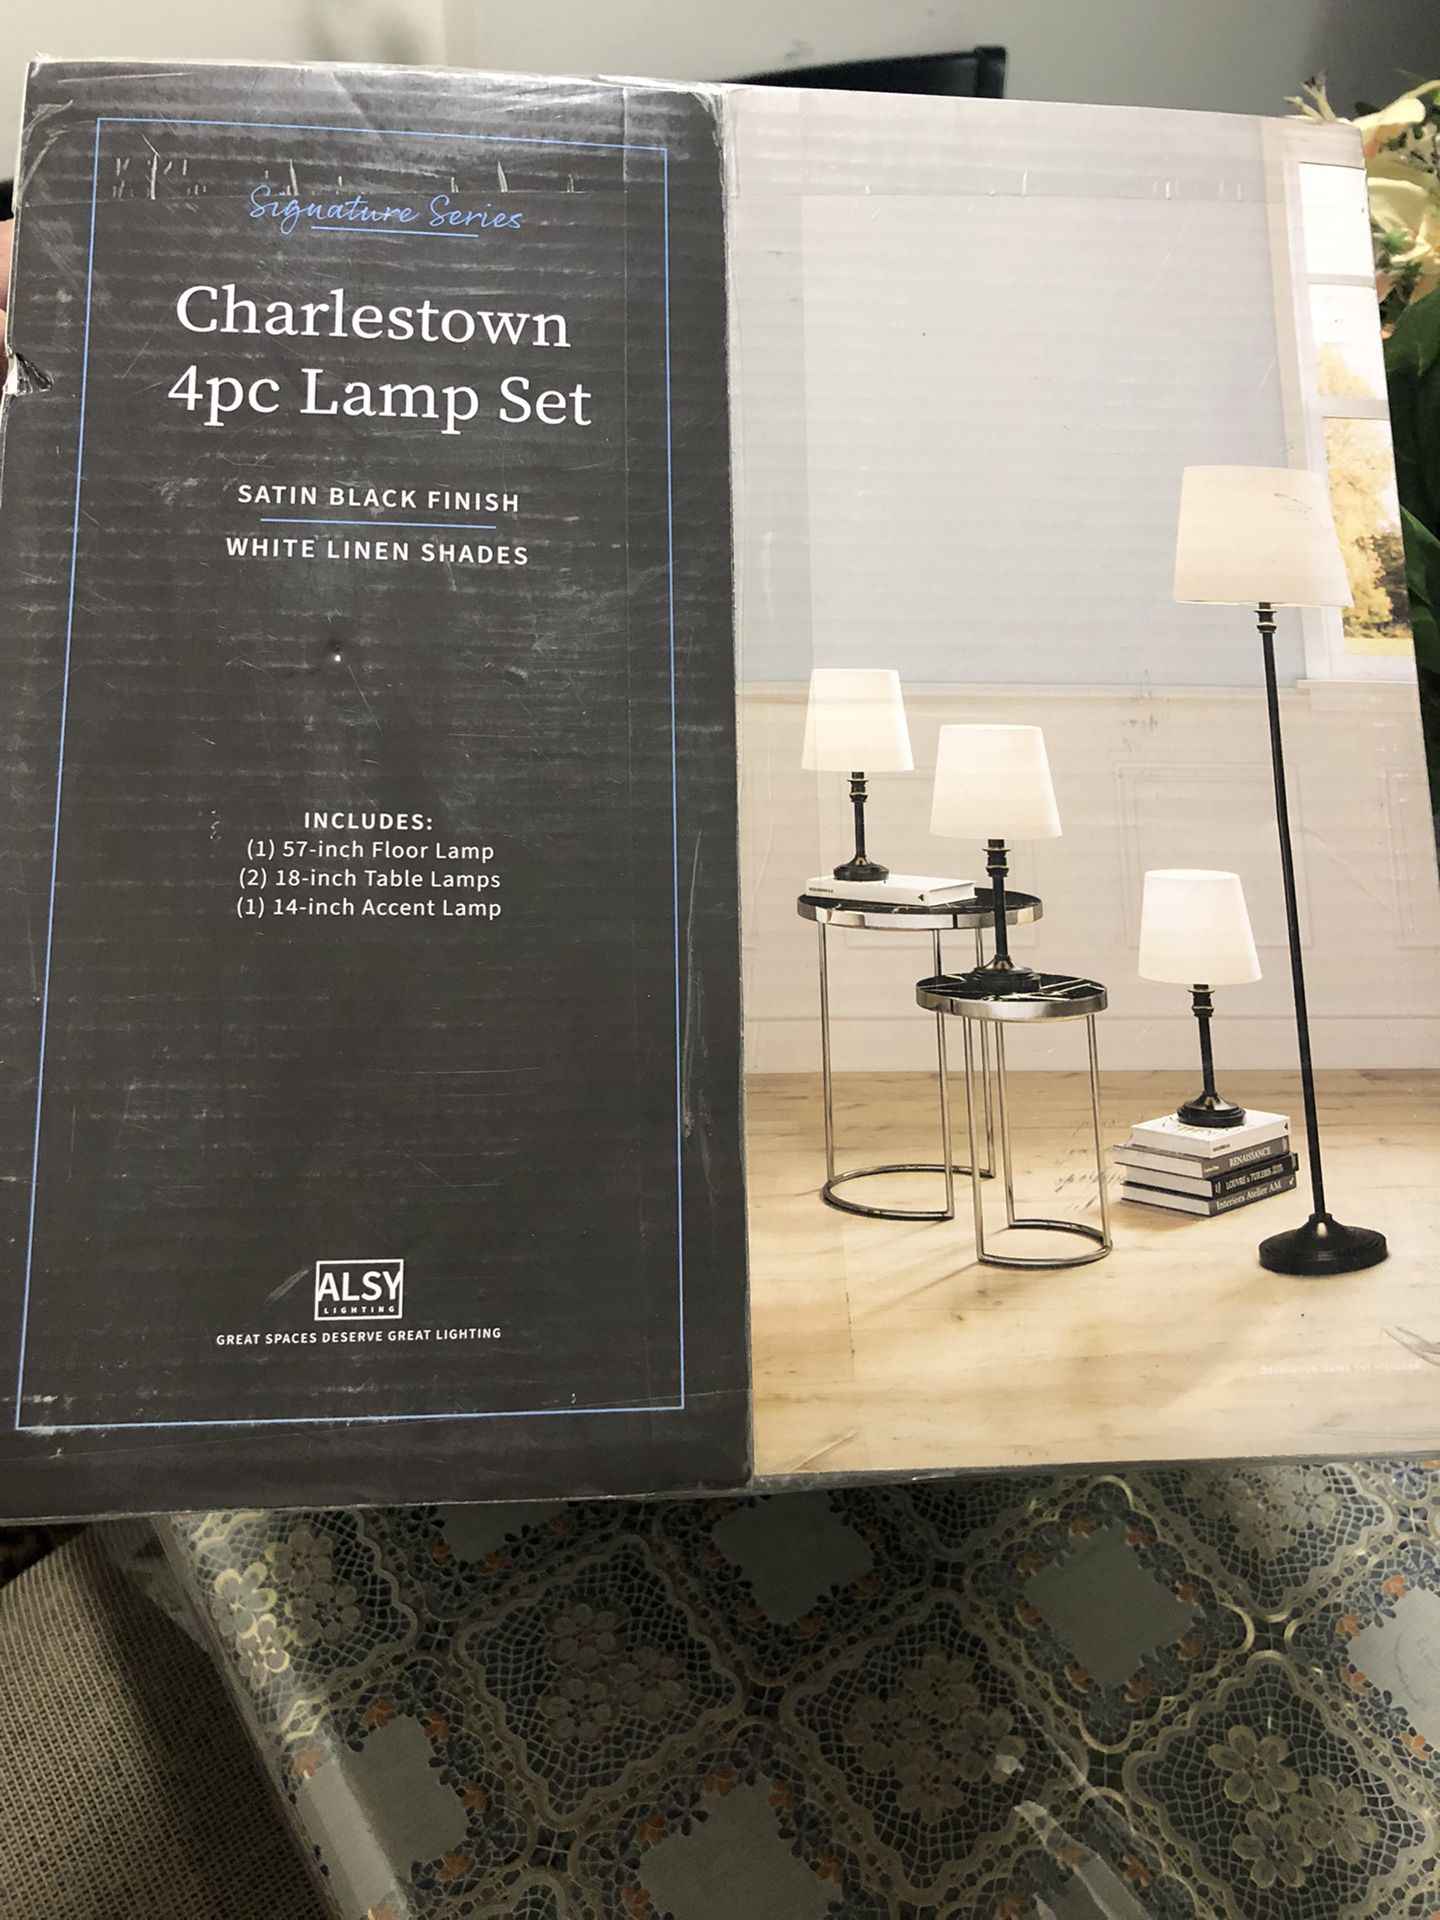 Charlestown 4pc Lamp Set